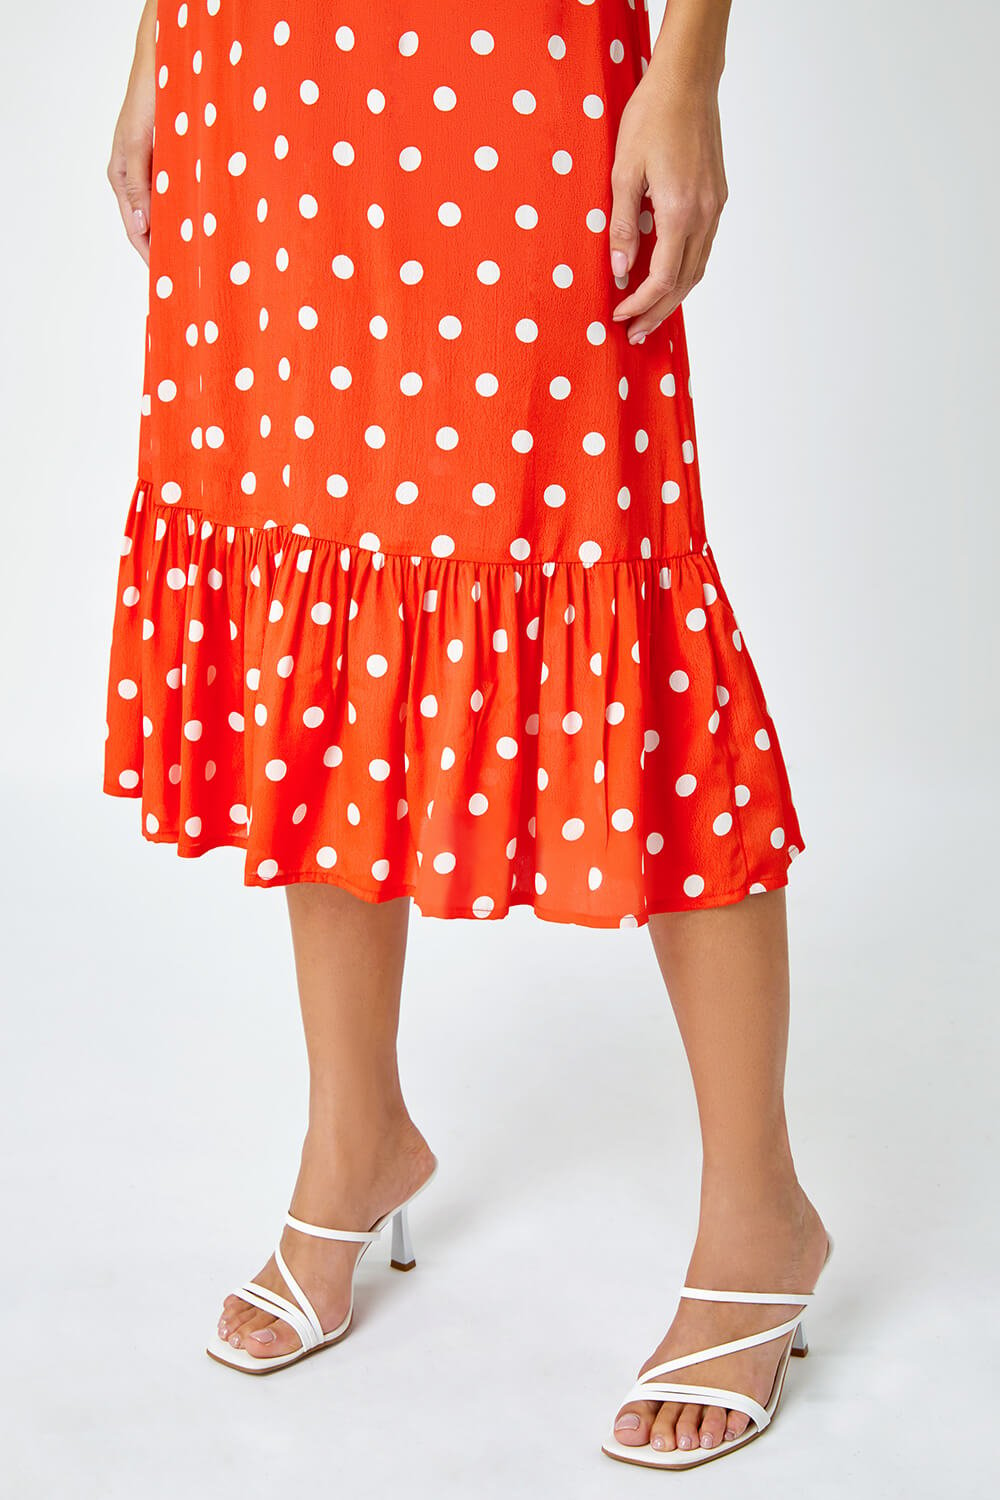 Red Polka Dot Twist Front Midi Dress, Image 6 of 6